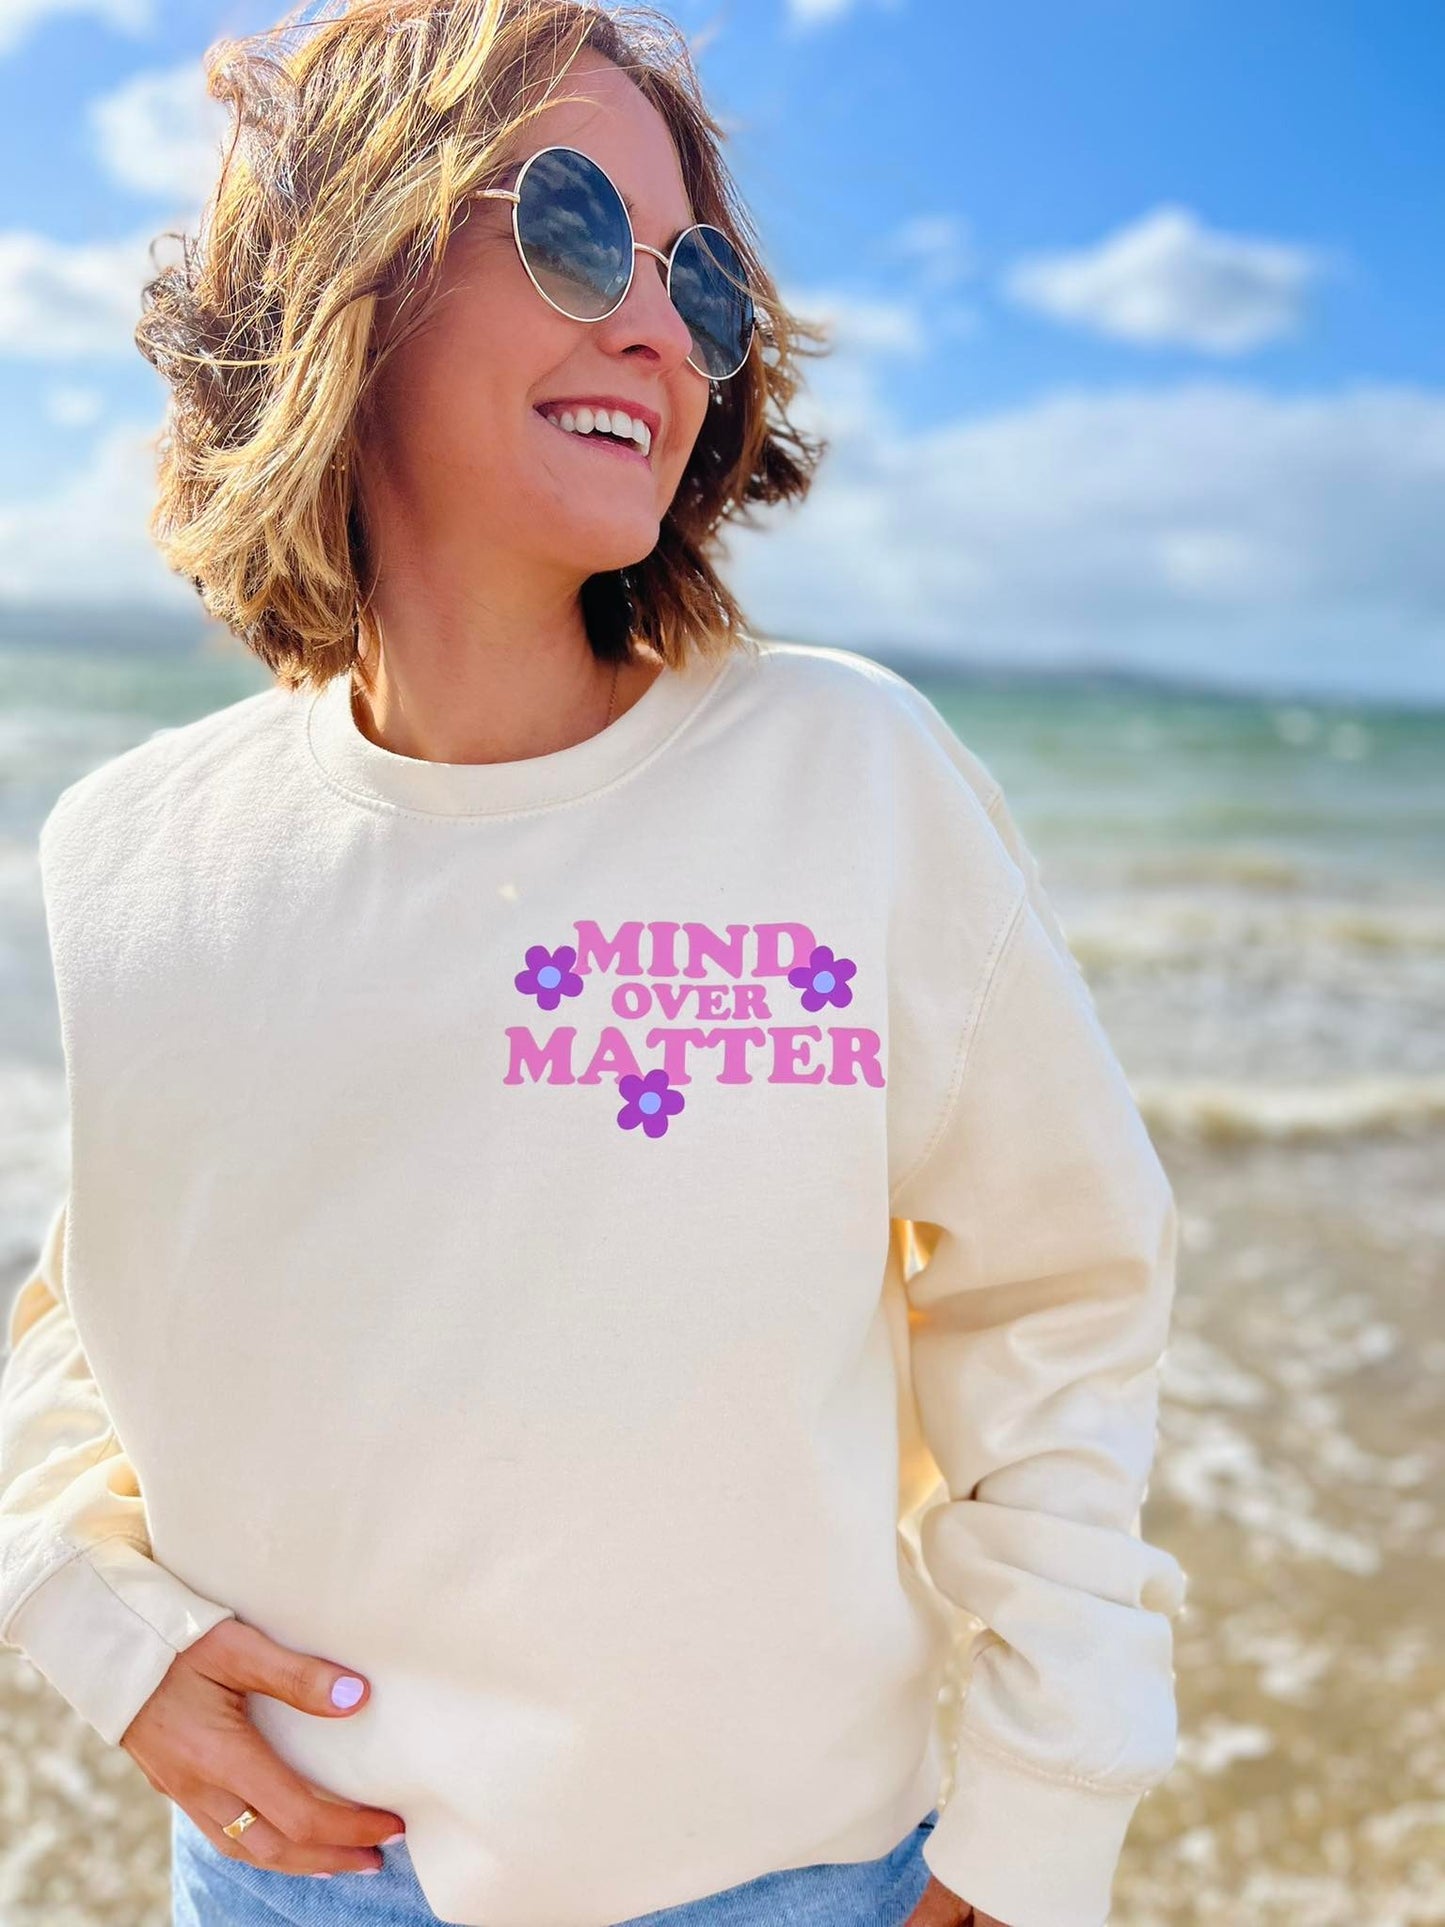 Vanilla summer slogan sweater baby pink text beach